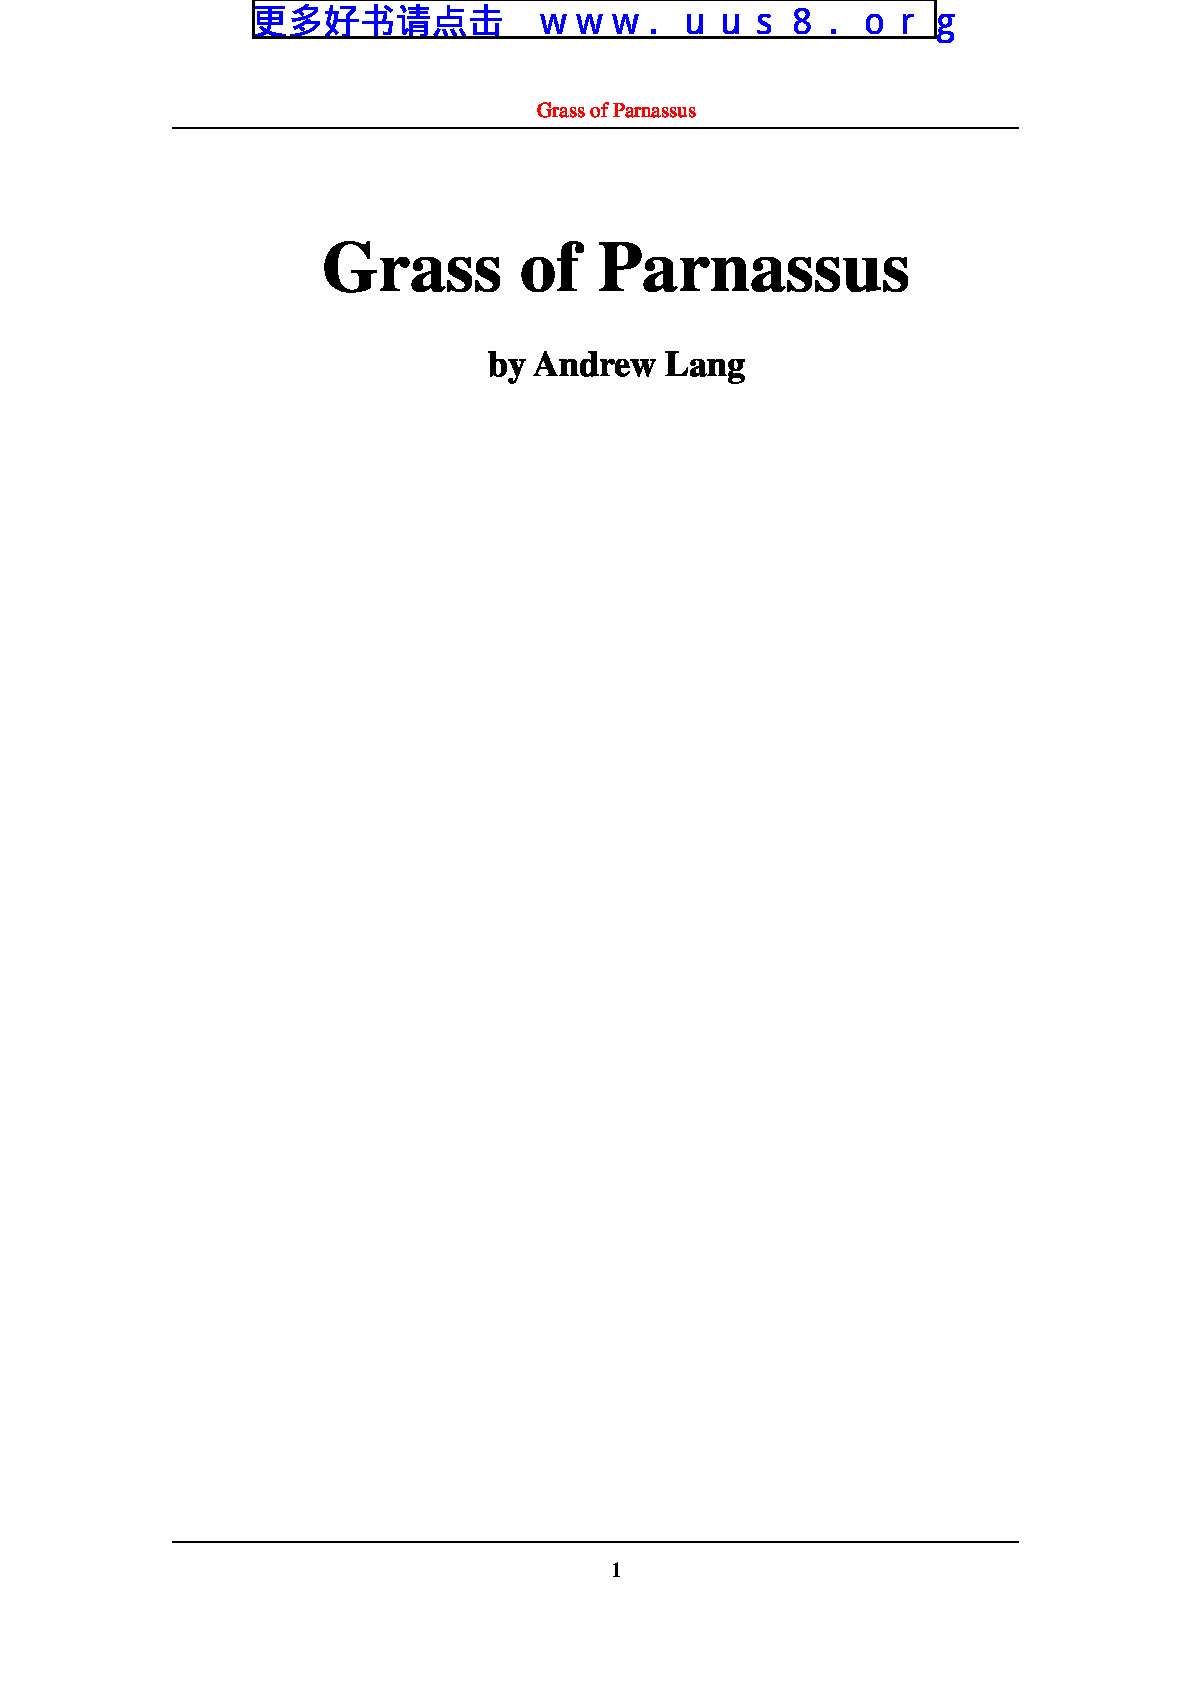 Grass_of_Parnassus(帕那色斯草)